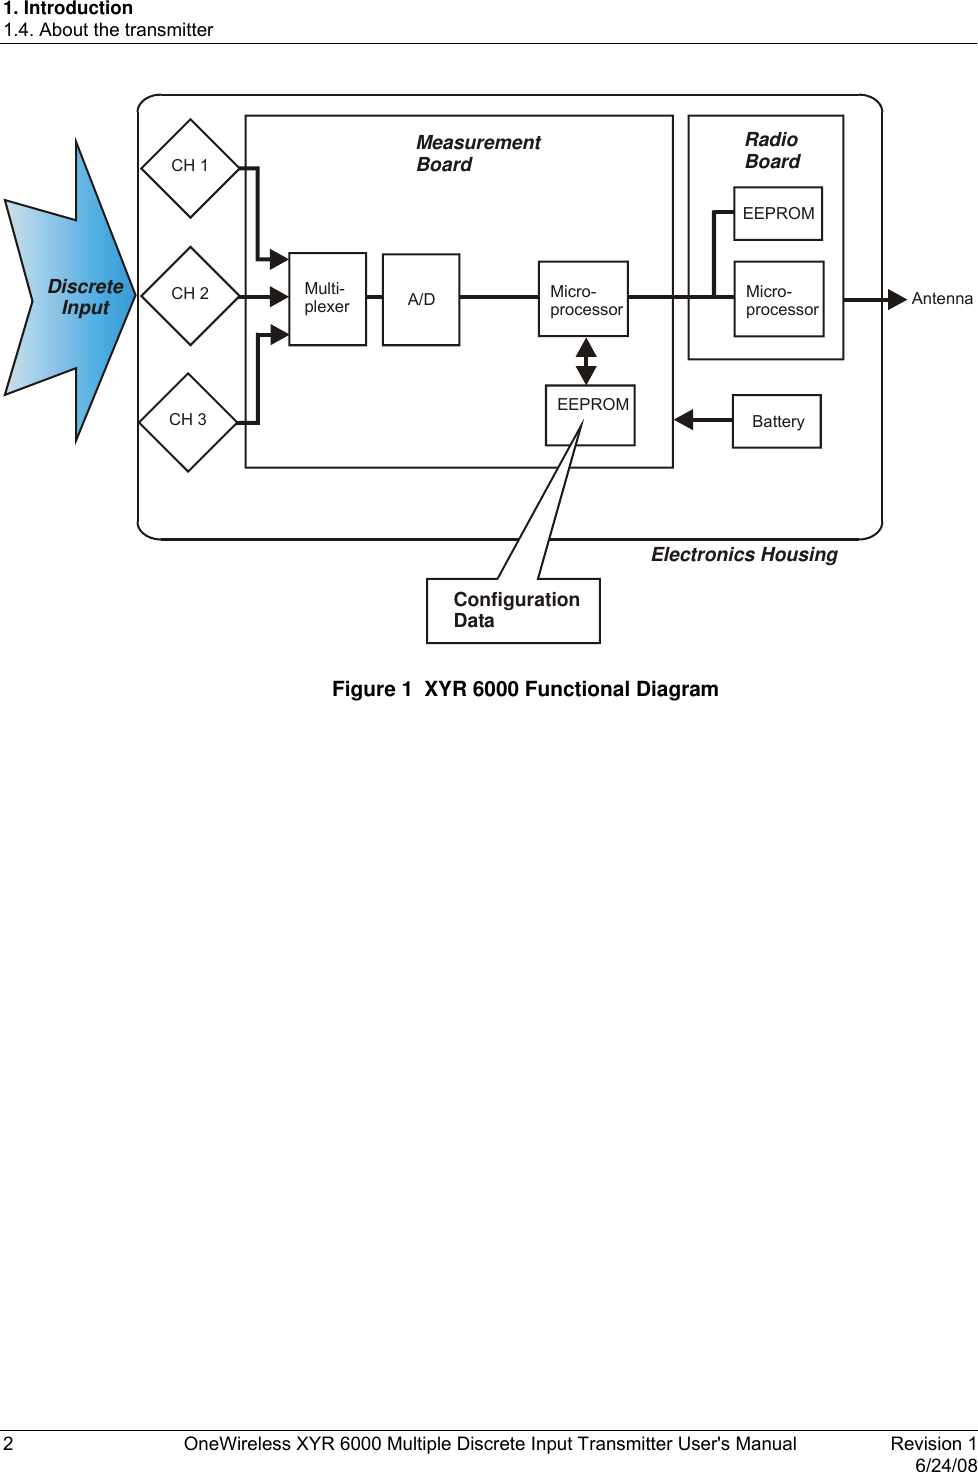 1. Introduction 1.4. About the transmitter 2  OneWireless XYR 6000 Multiple Discrete Input Transmitter User&apos;s Manual   Revision 1   6/24/08 EEPROMA/DCH 1Multi-plexerElectronics HousingRadioBoardDiscreteInputMicro-processorMicro-processorEEPROMBatteryAntennaMeasurementBoardConfigurationDataCH 2CH 3  Figure 1  XYR 6000 Functional Diagram  